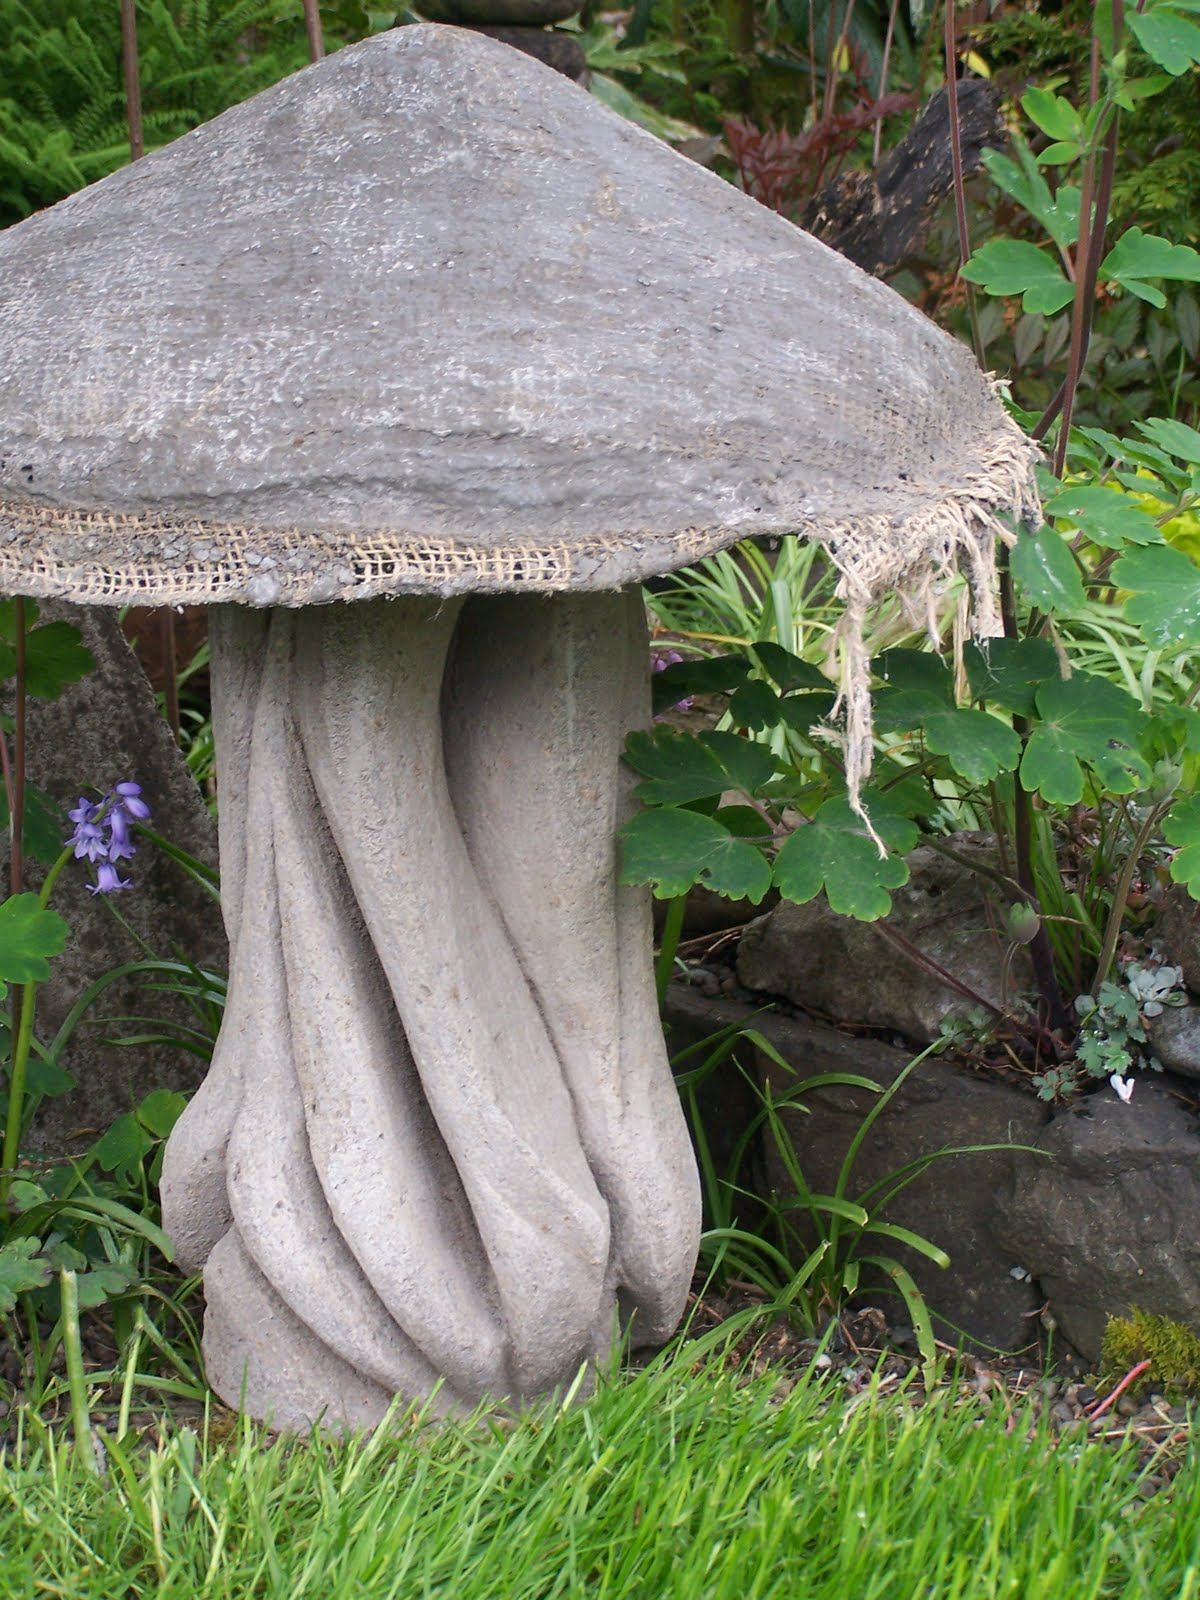 Hypertufa mushroom